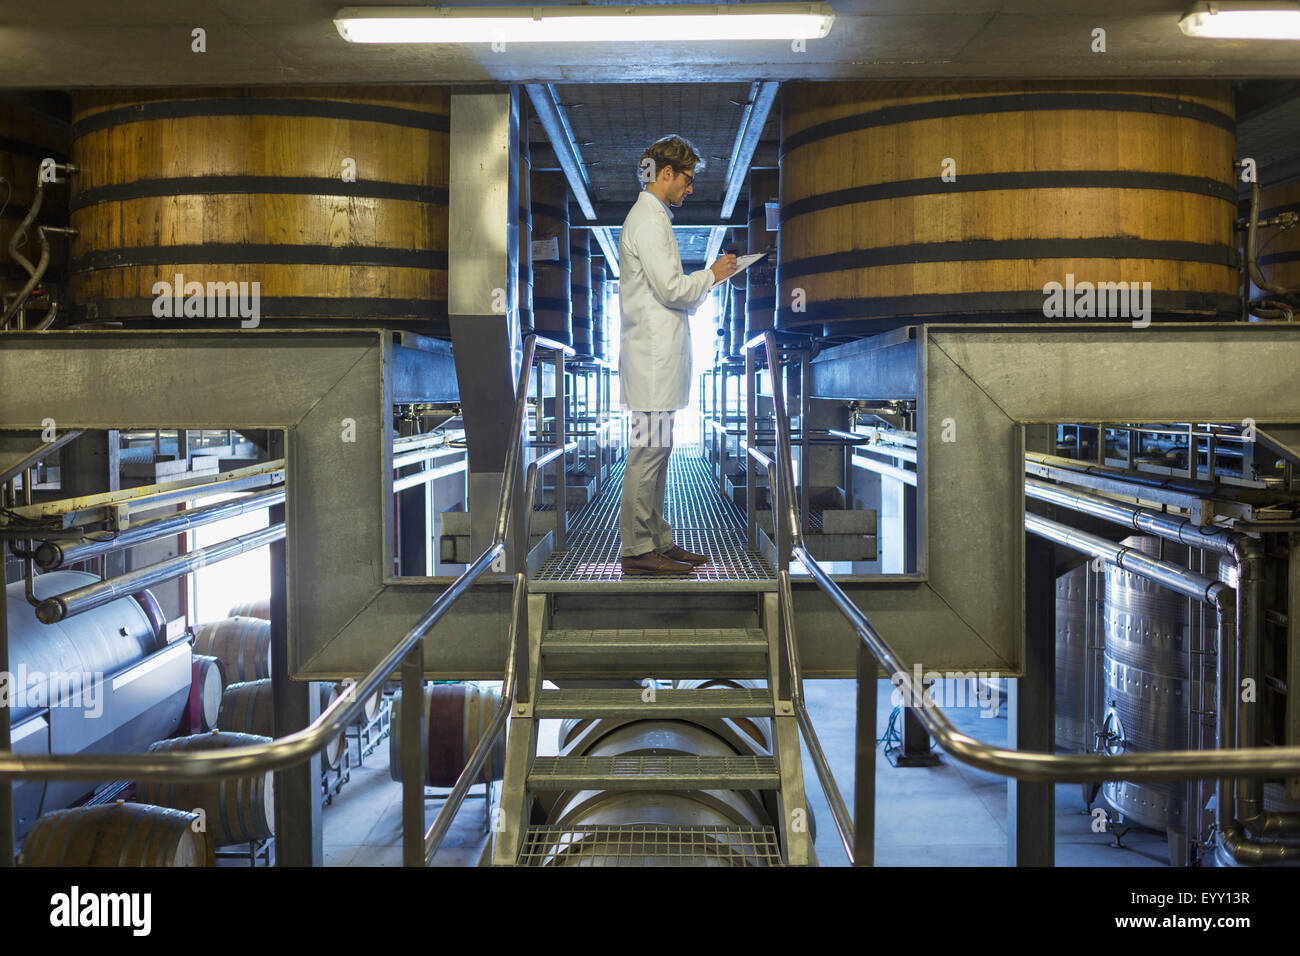 Vintner in lab coat on platform in winery cellar Stock Photo